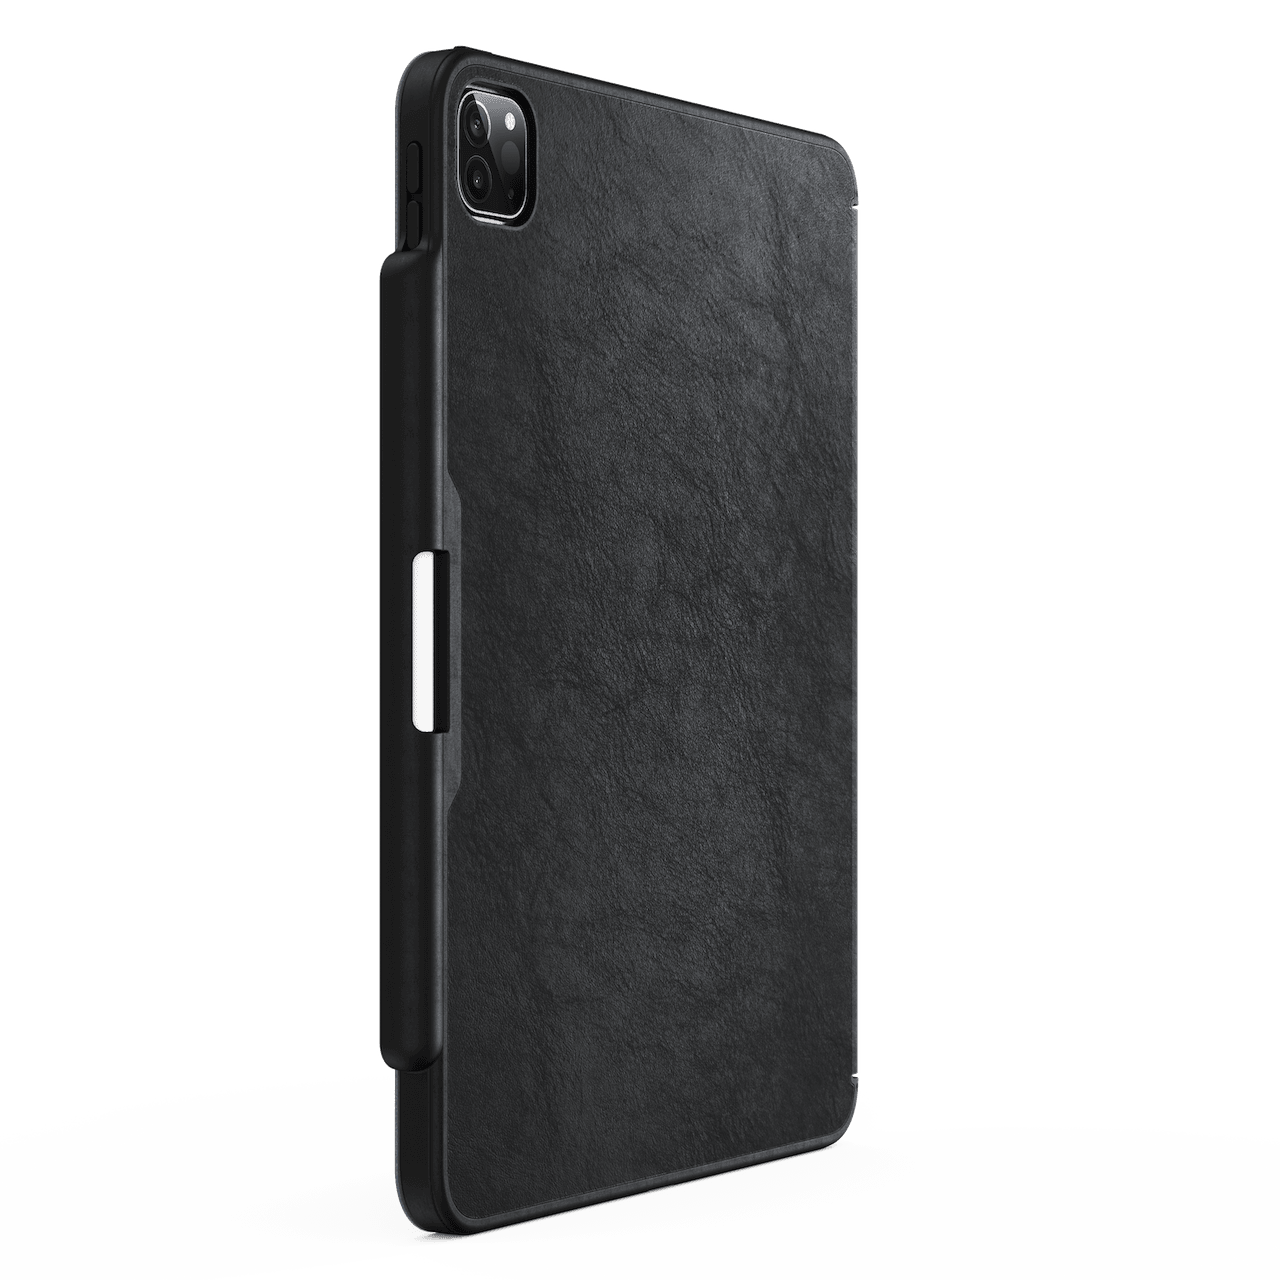 MoArmouz - Folio Smart Cover for iPad Pro 11-inch M1, 3rd Gen 2021